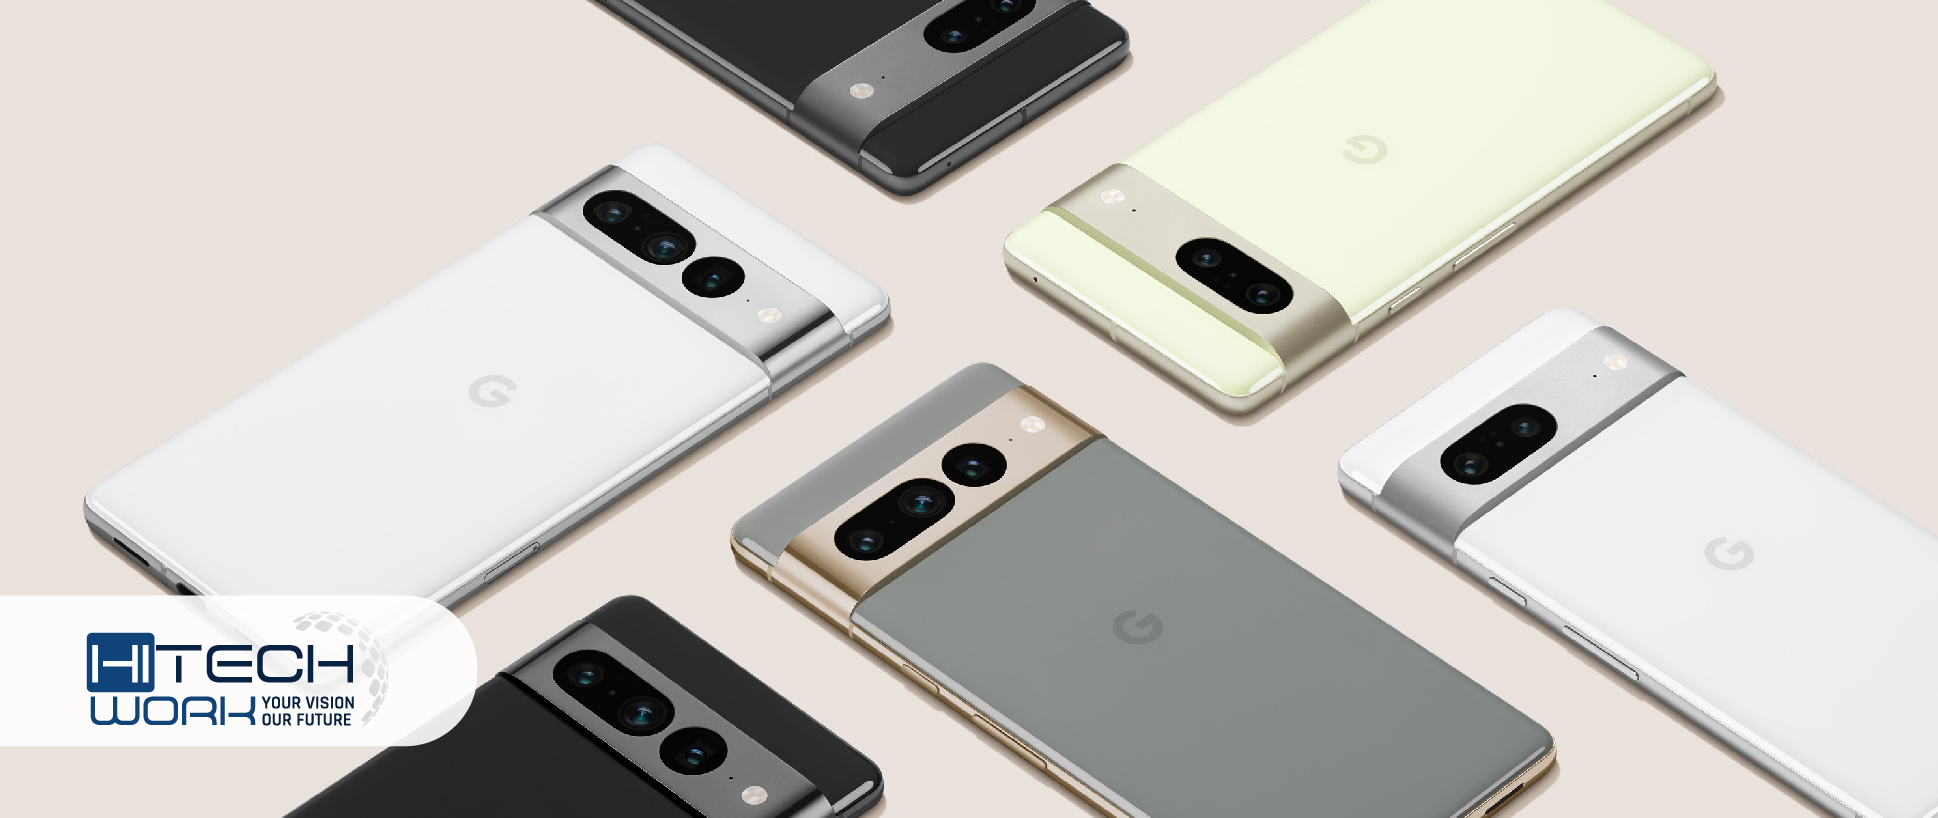 Google Brings April Patch to Pixel Phones after Week-long Delay